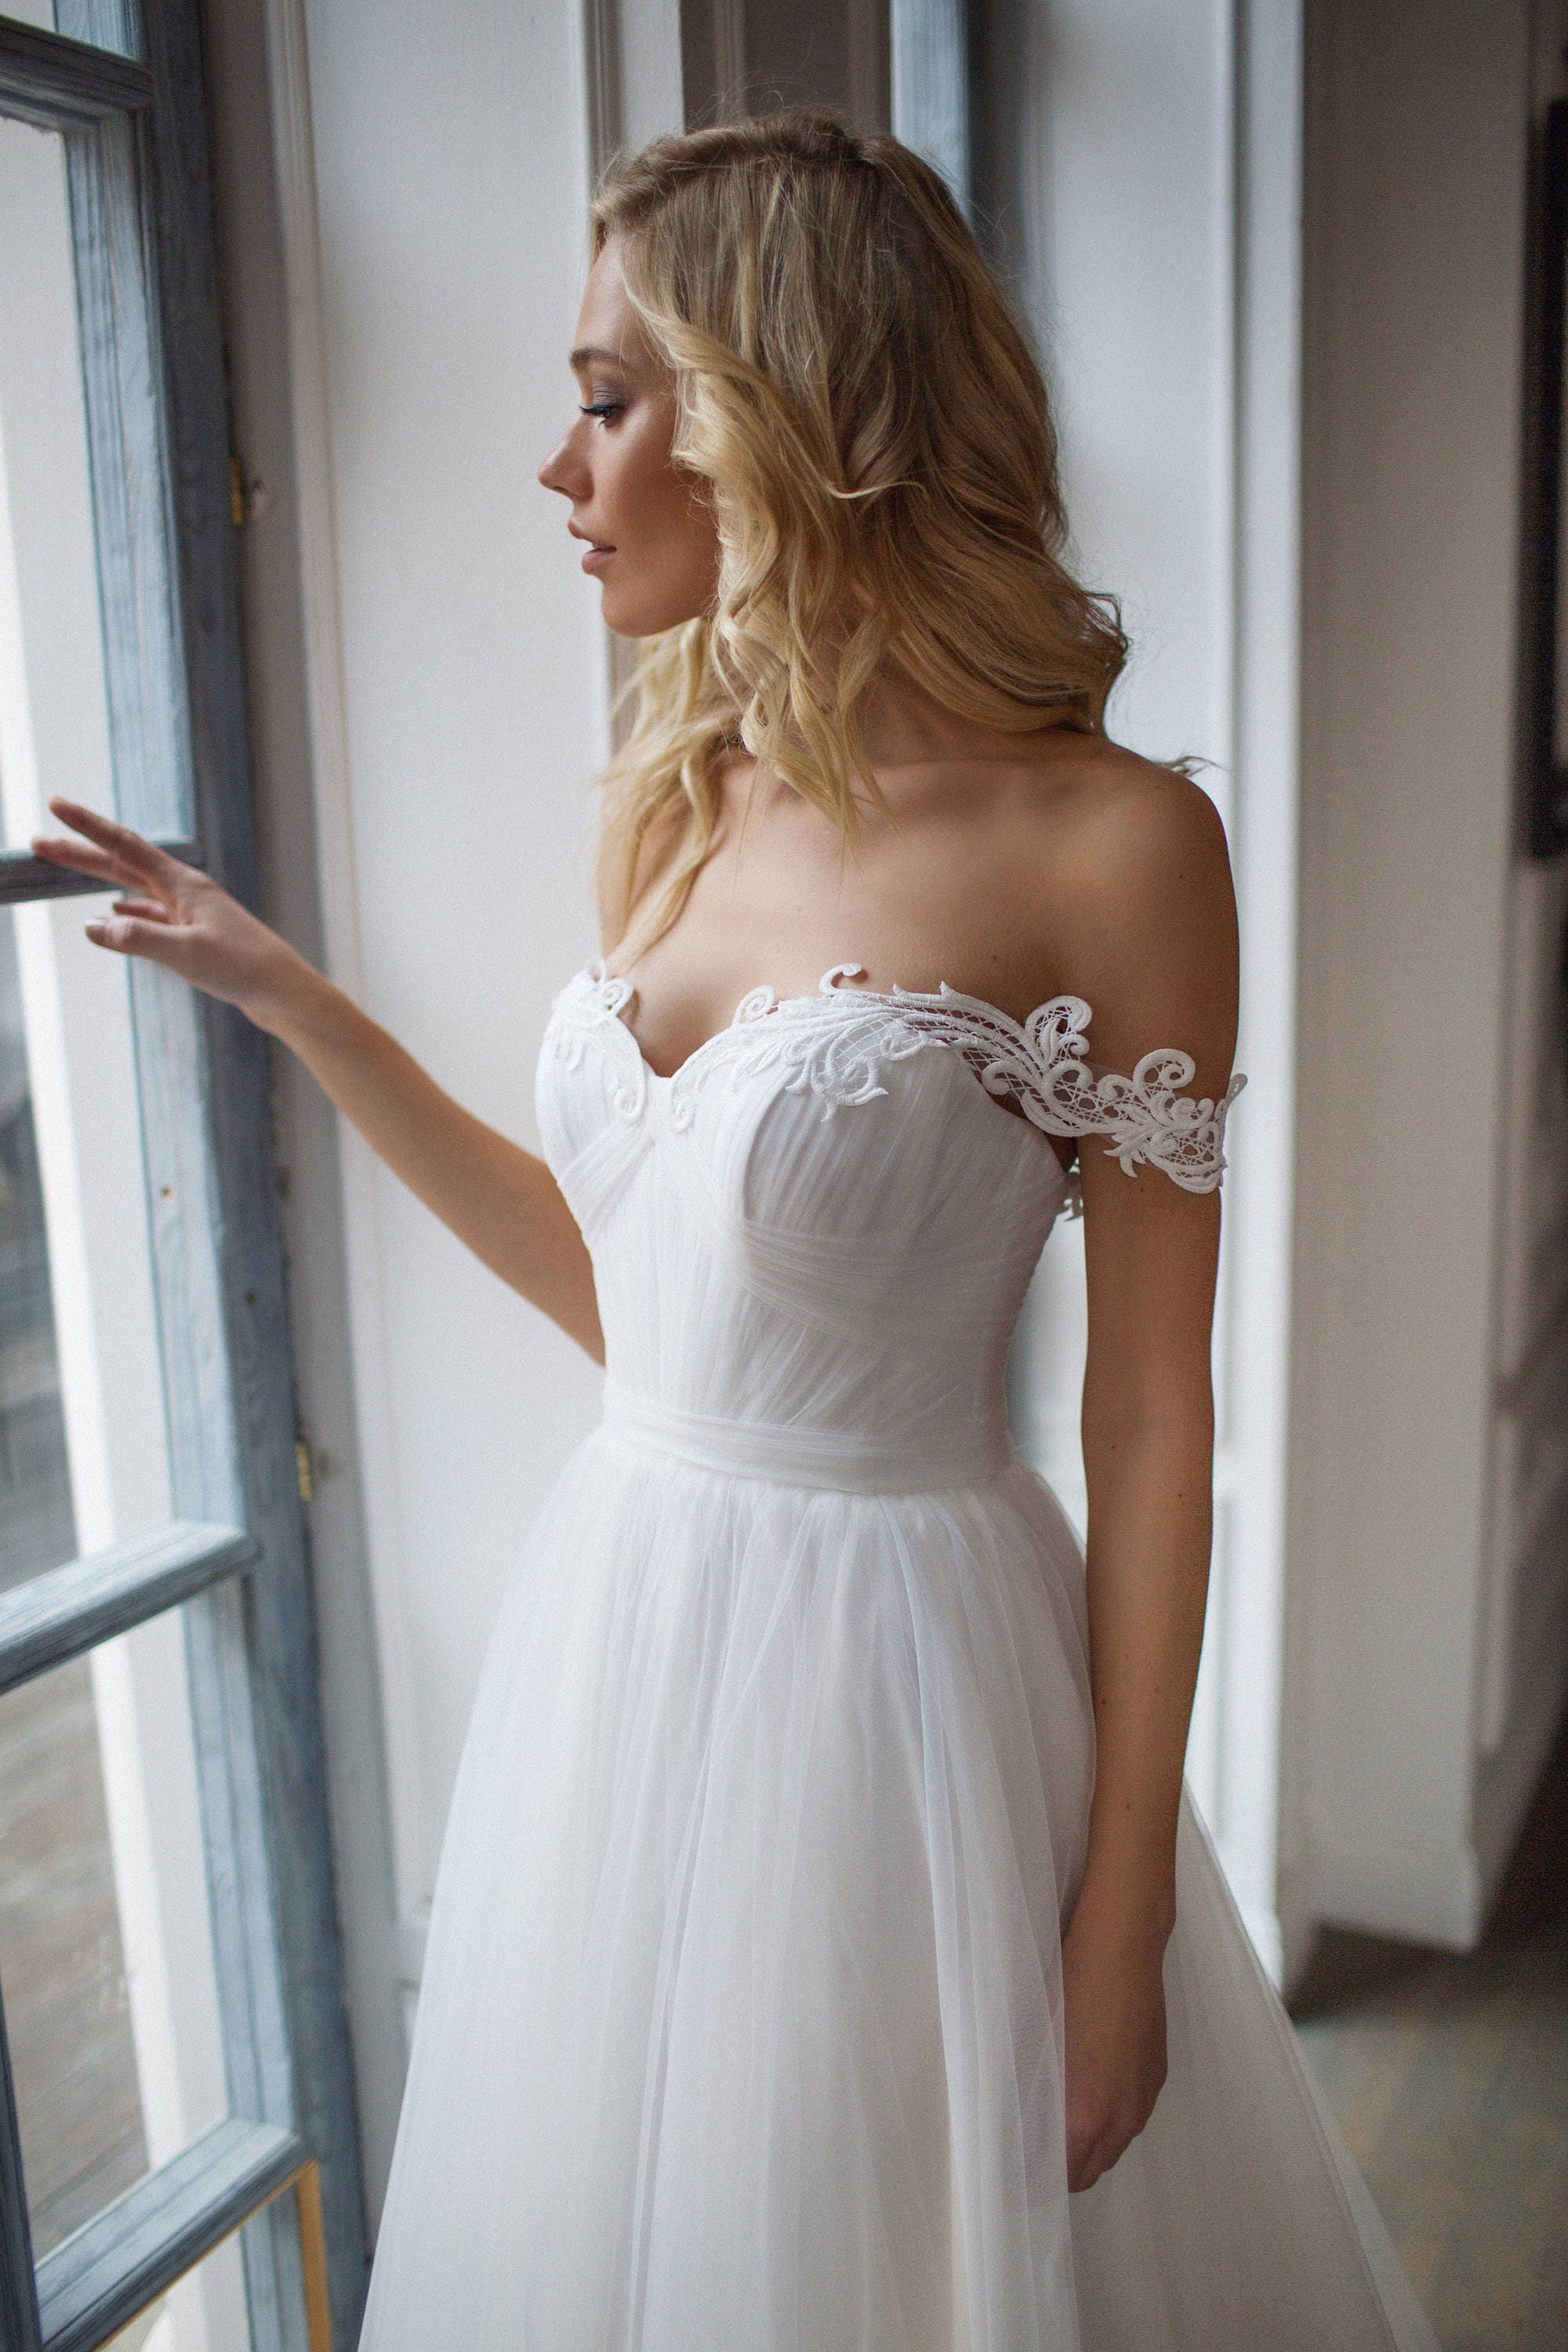 Off the shoulder simple wedding dress | Etsy